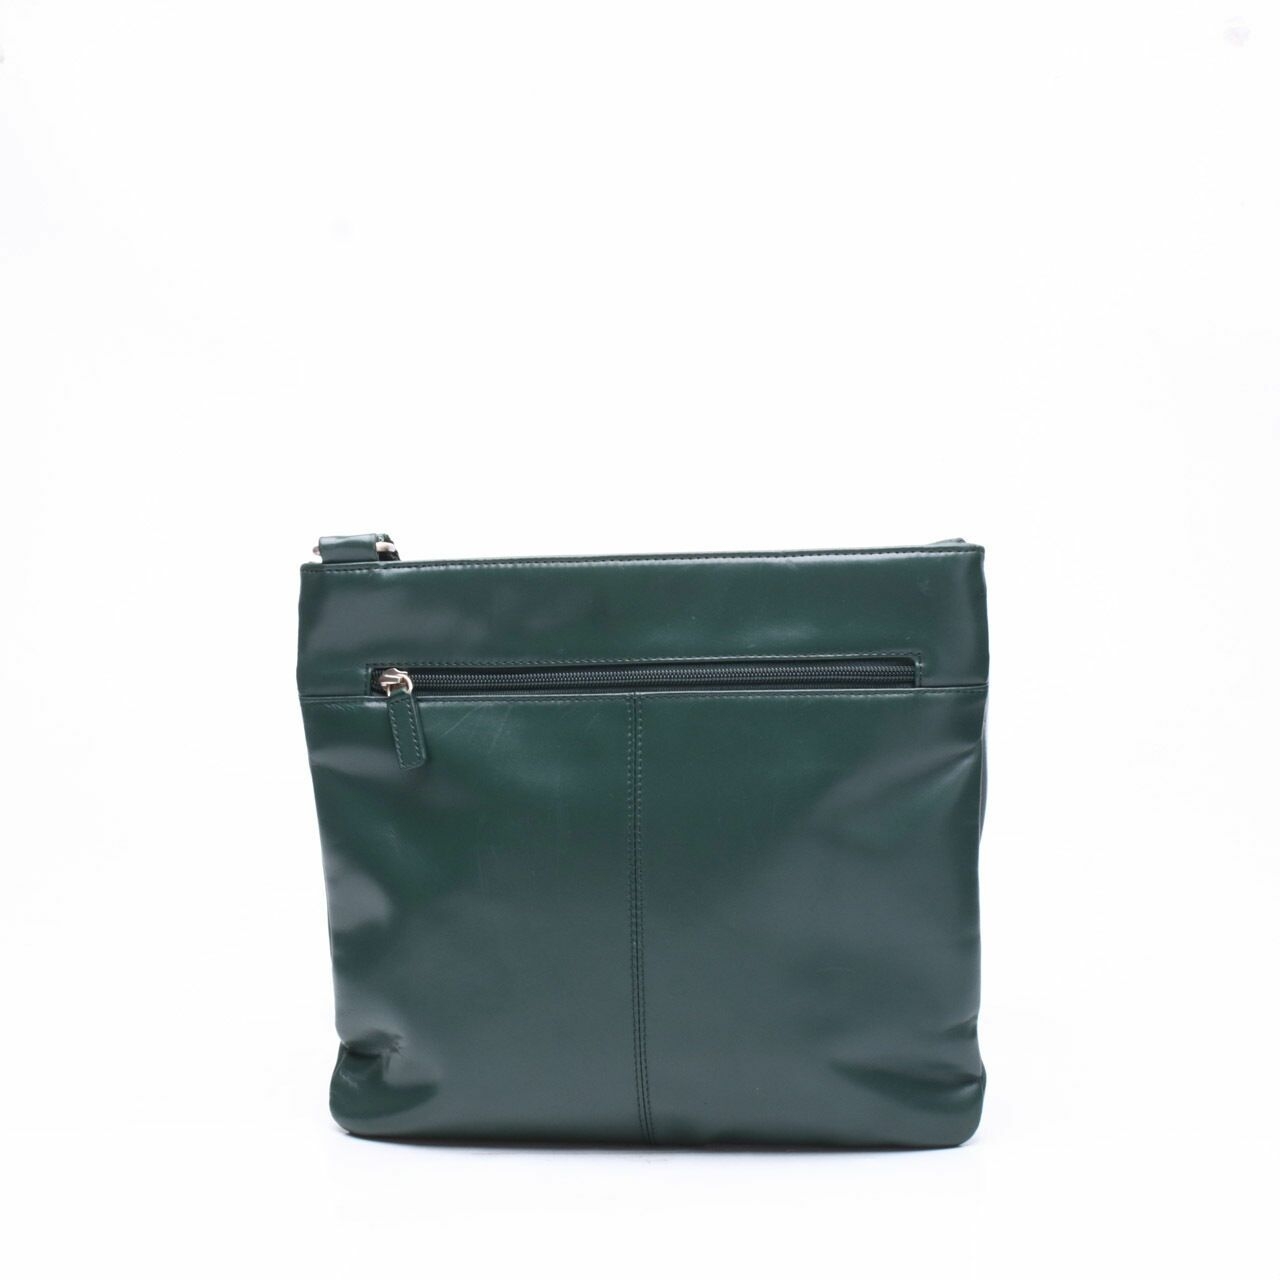 Radley London Green Sling Bag